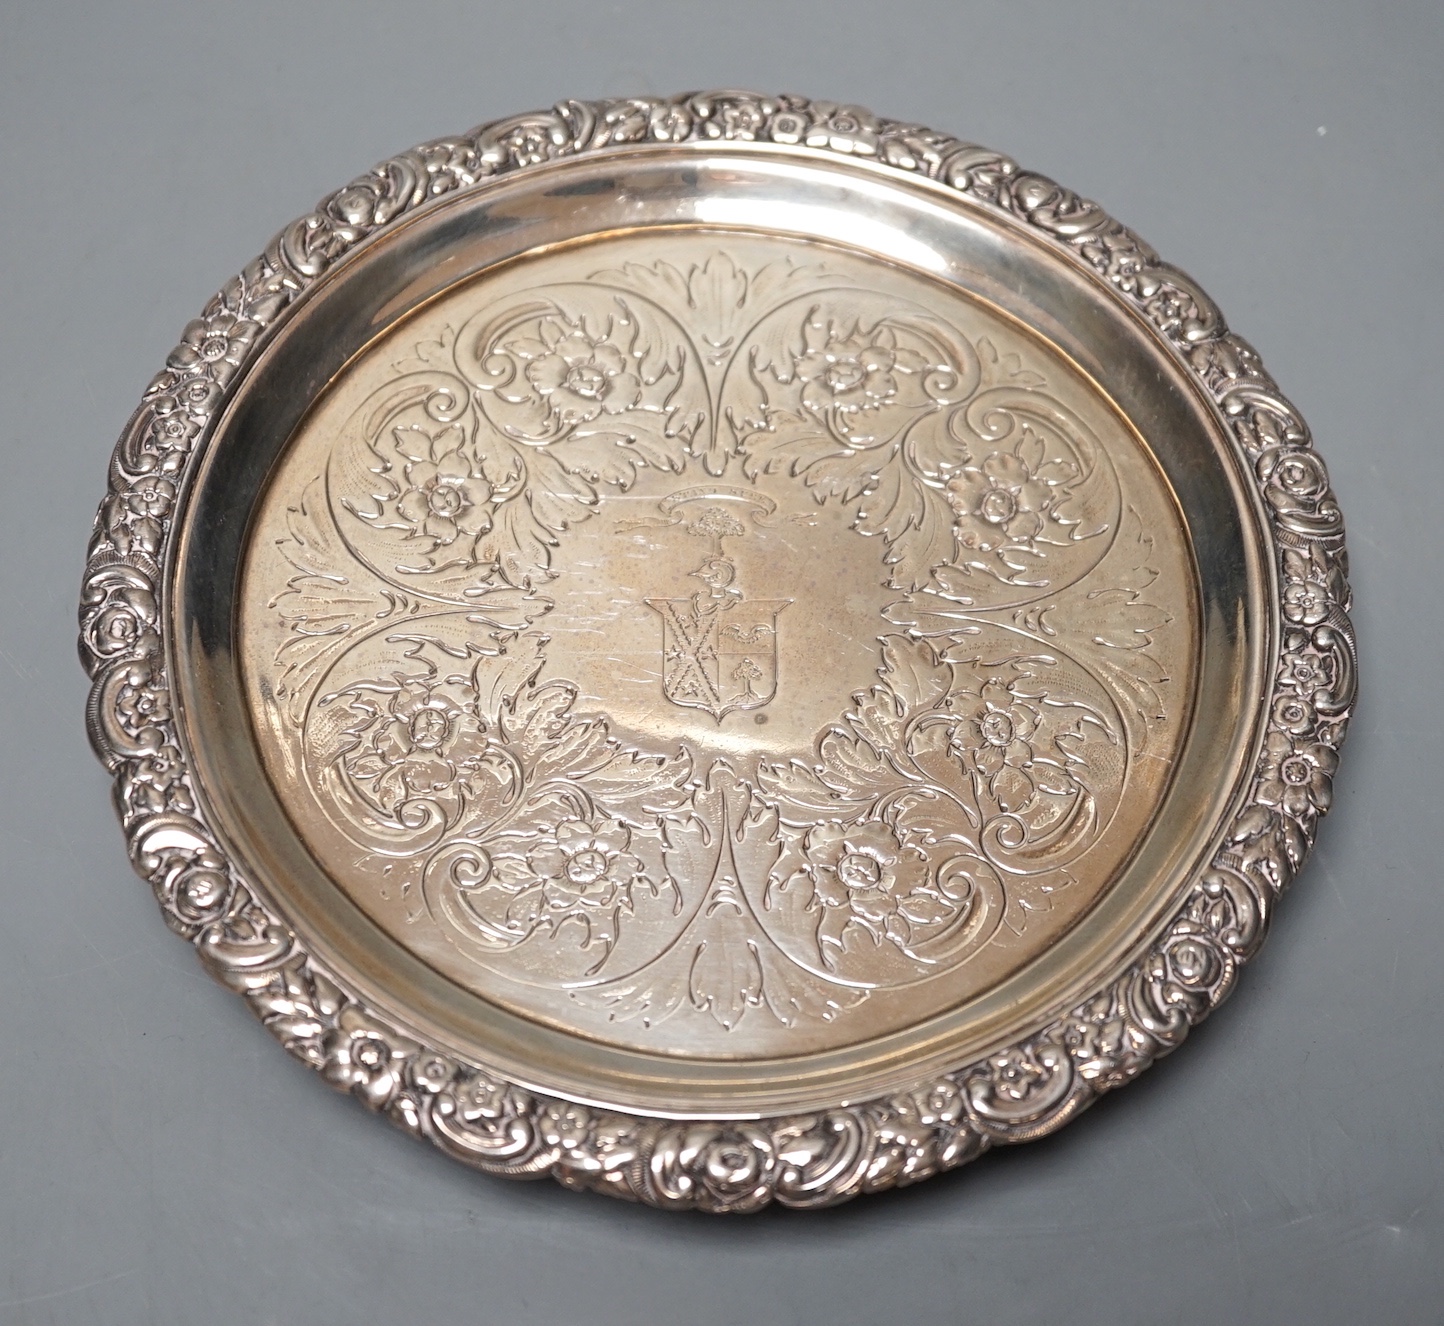 A George IV engraved silver waiter, Emes & Barnard, London, 1825, 17.7cm, 7.5oz.